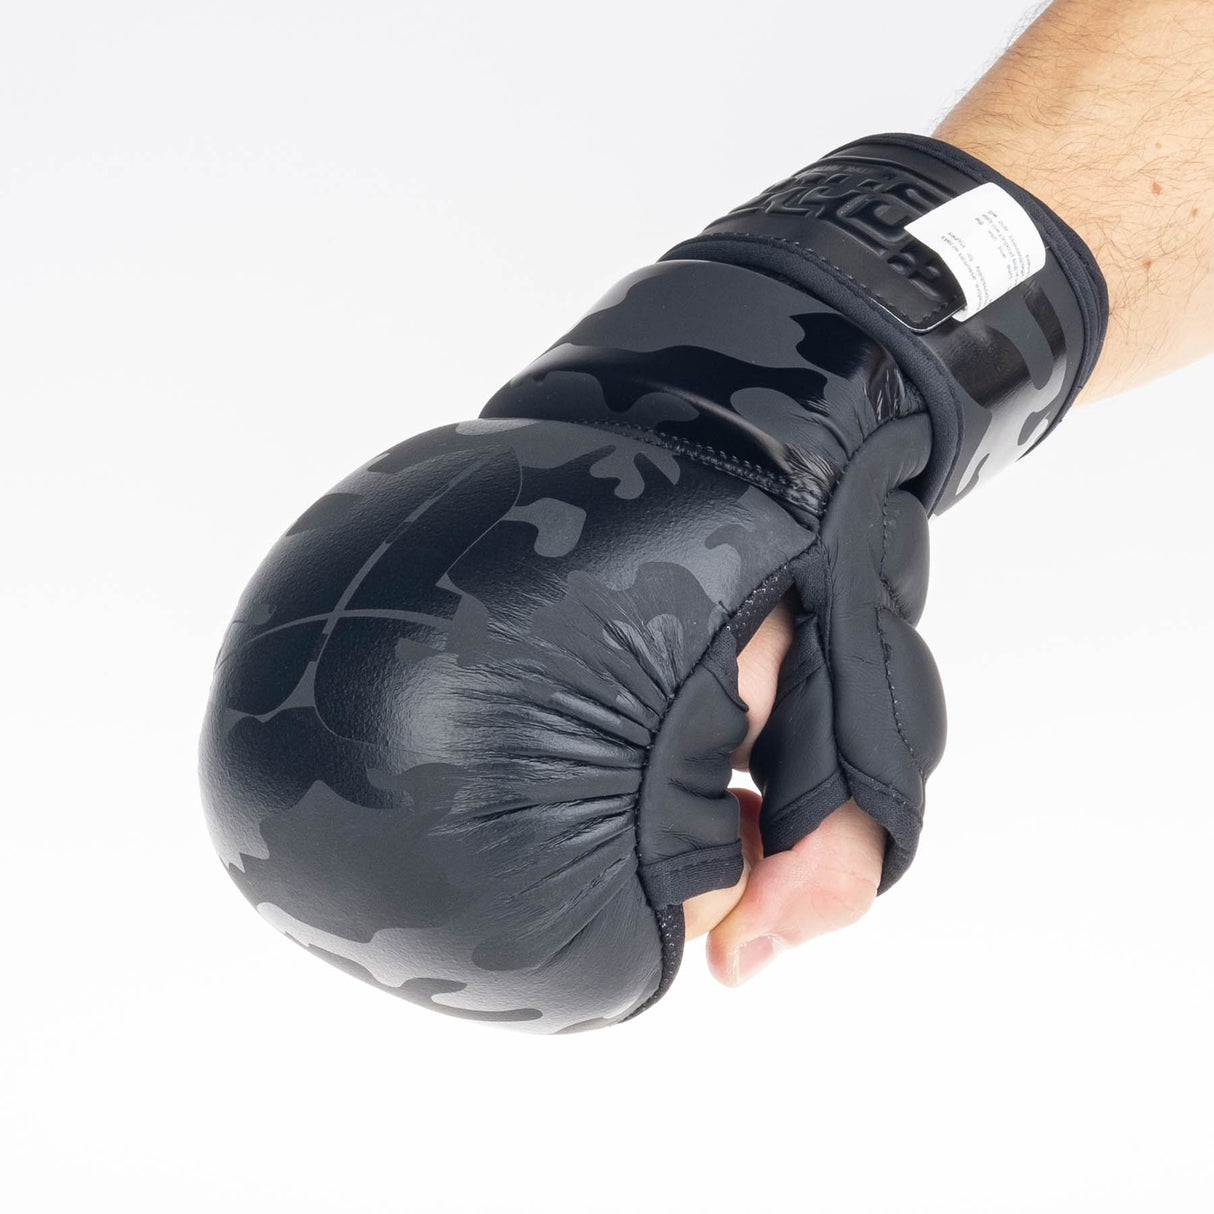 Fighter MMA Handschuhe Training - schwarz camo, FMG-001CBK